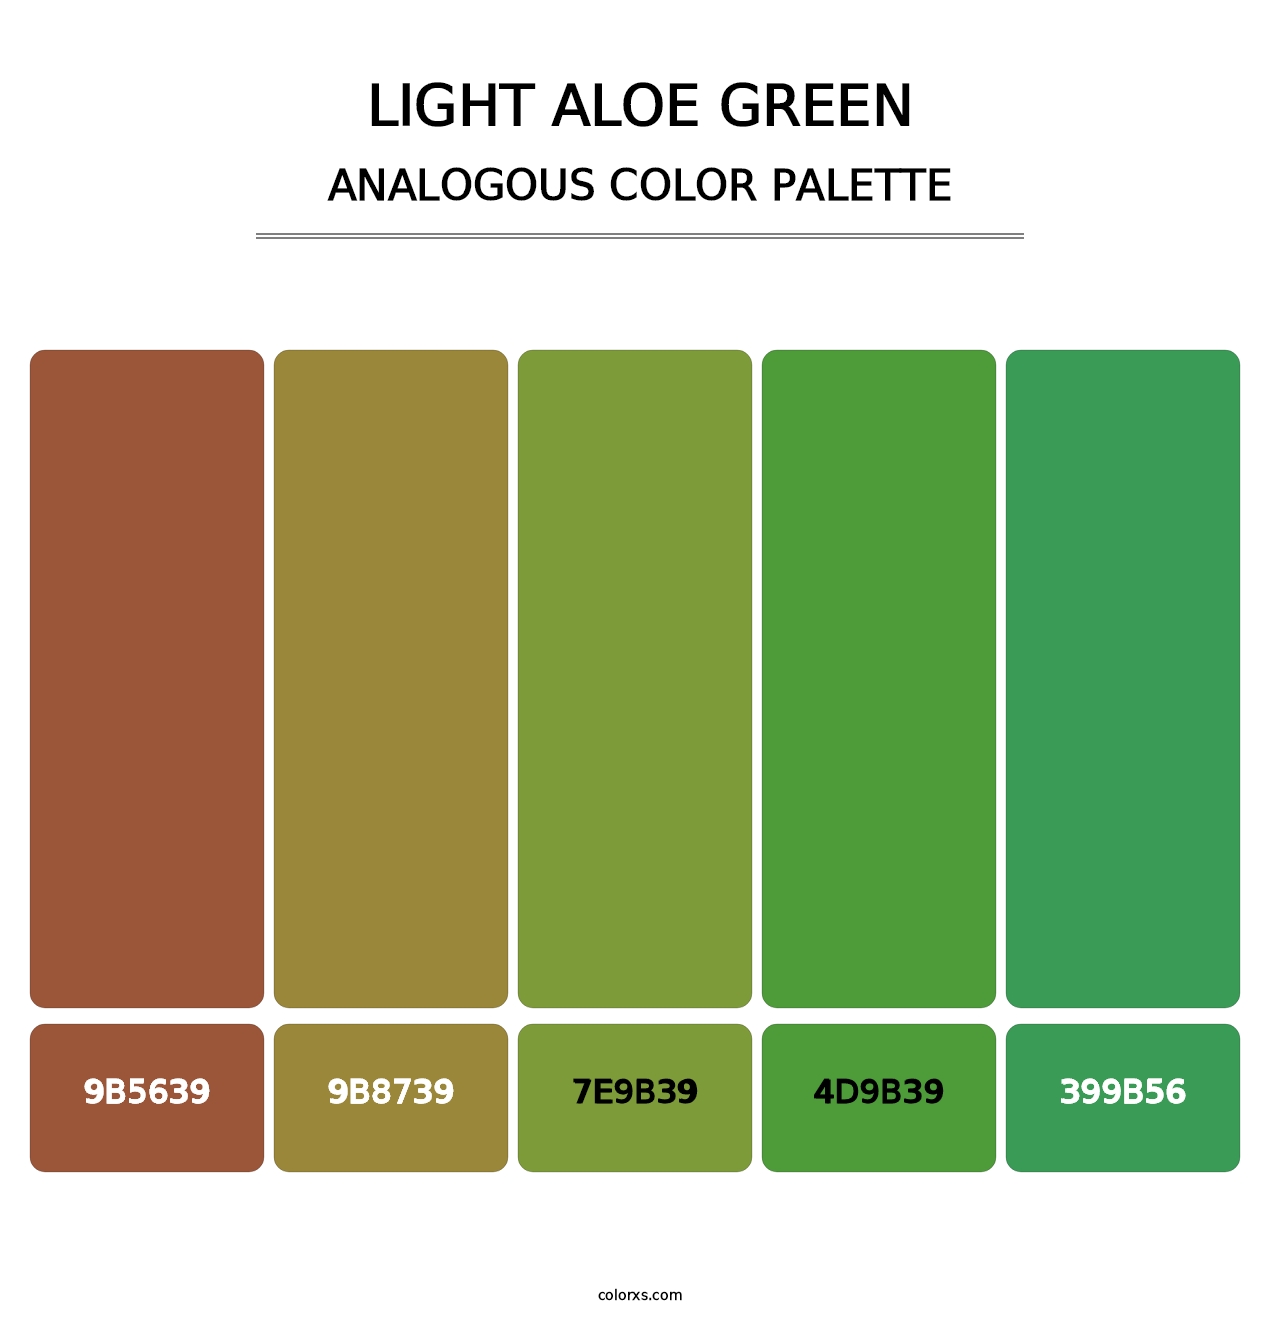 Light Aloe Green - Analogous Color Palette